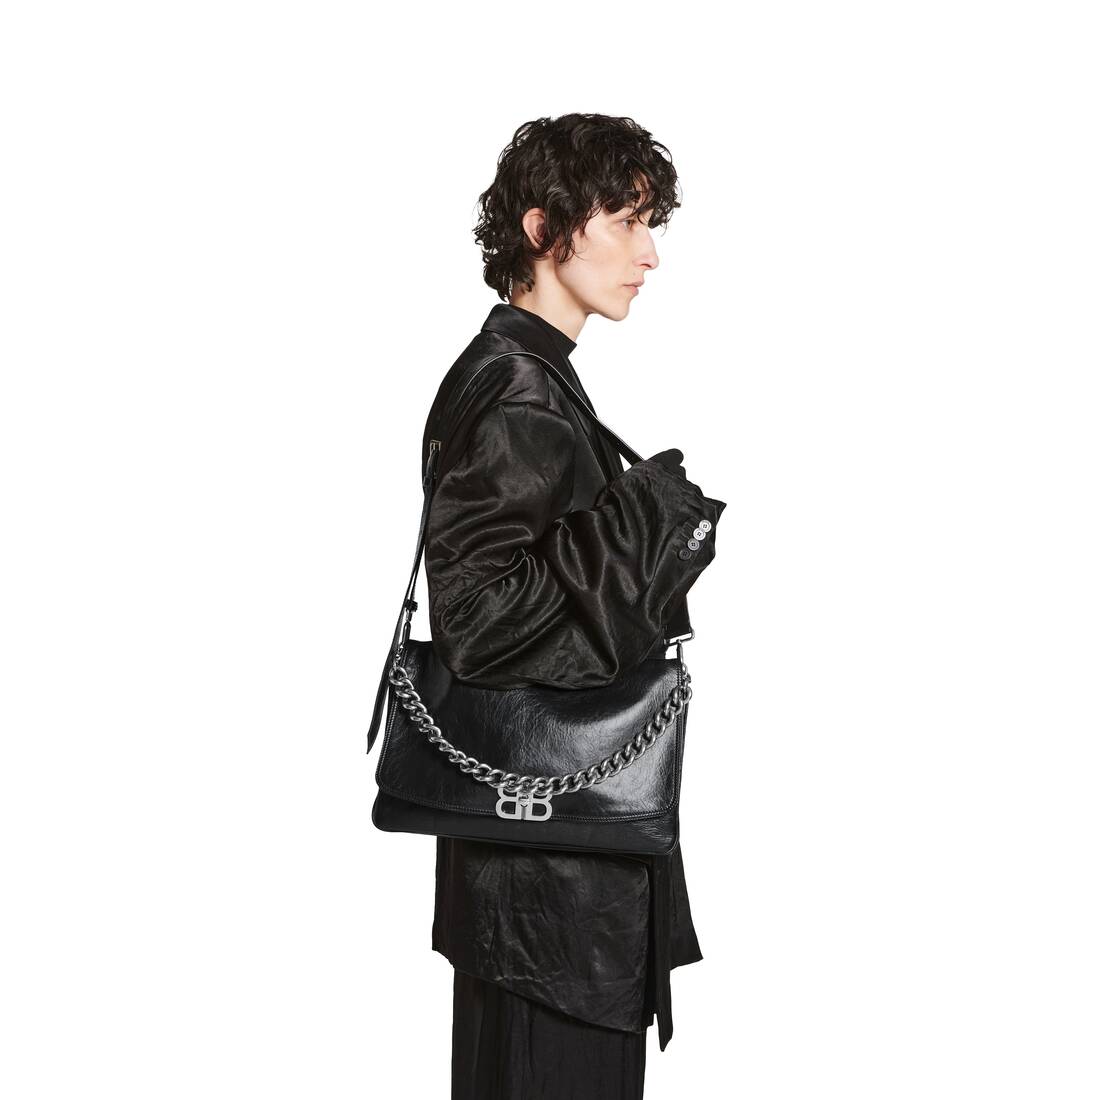 BB Leather Tote Bag in Black - Balenciaga